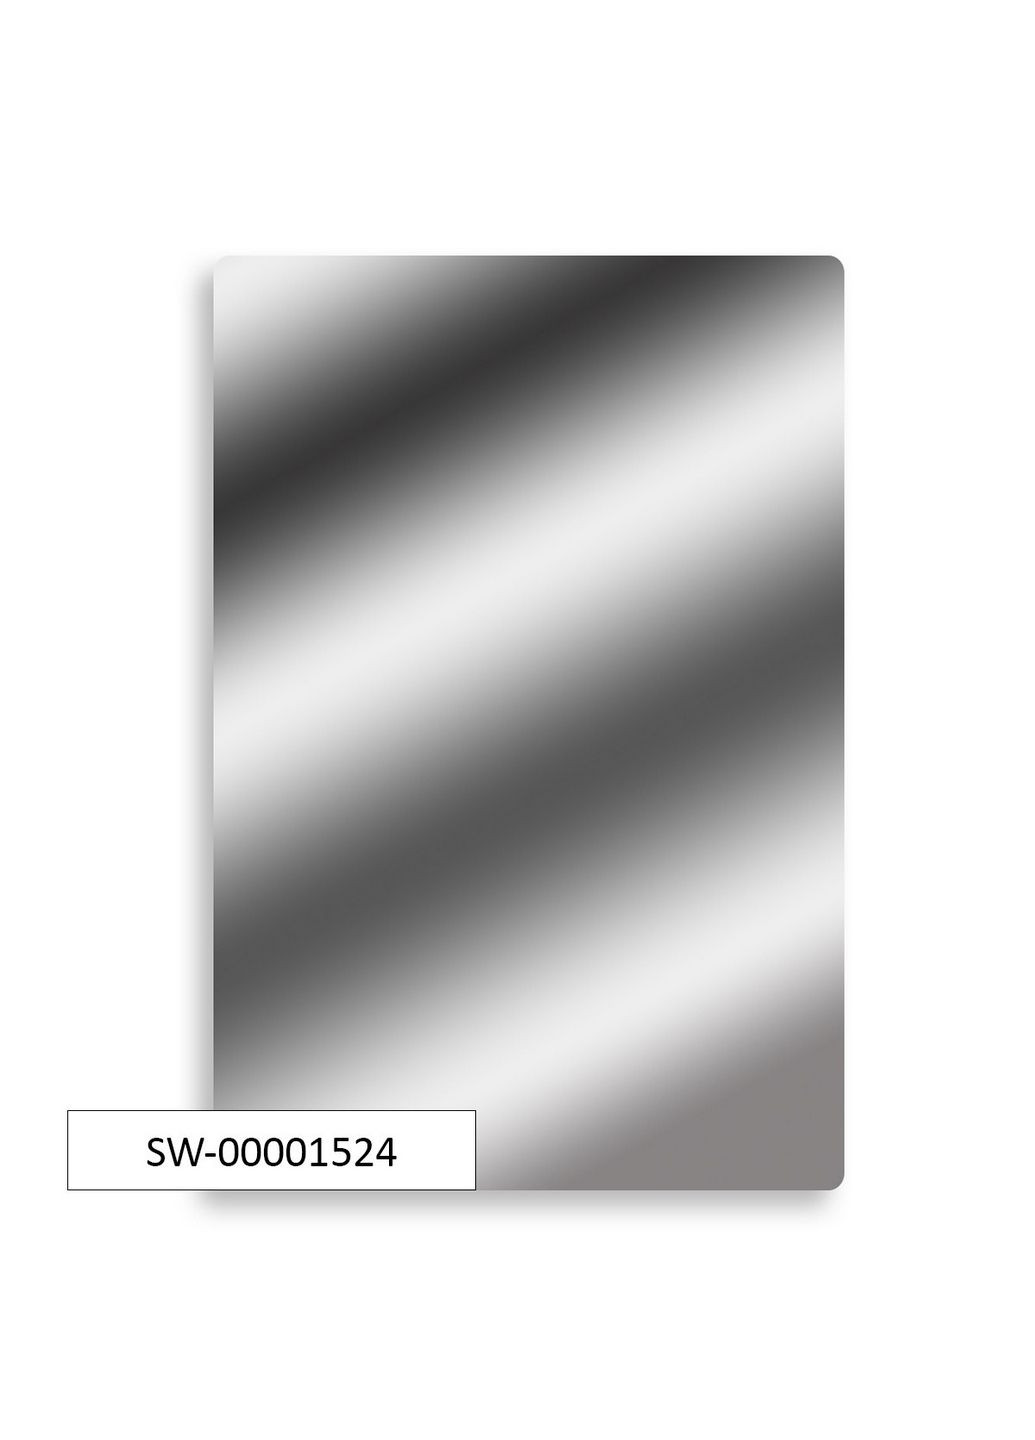 Зеркальная акриловая наклейка Sticker Wall (282588493)